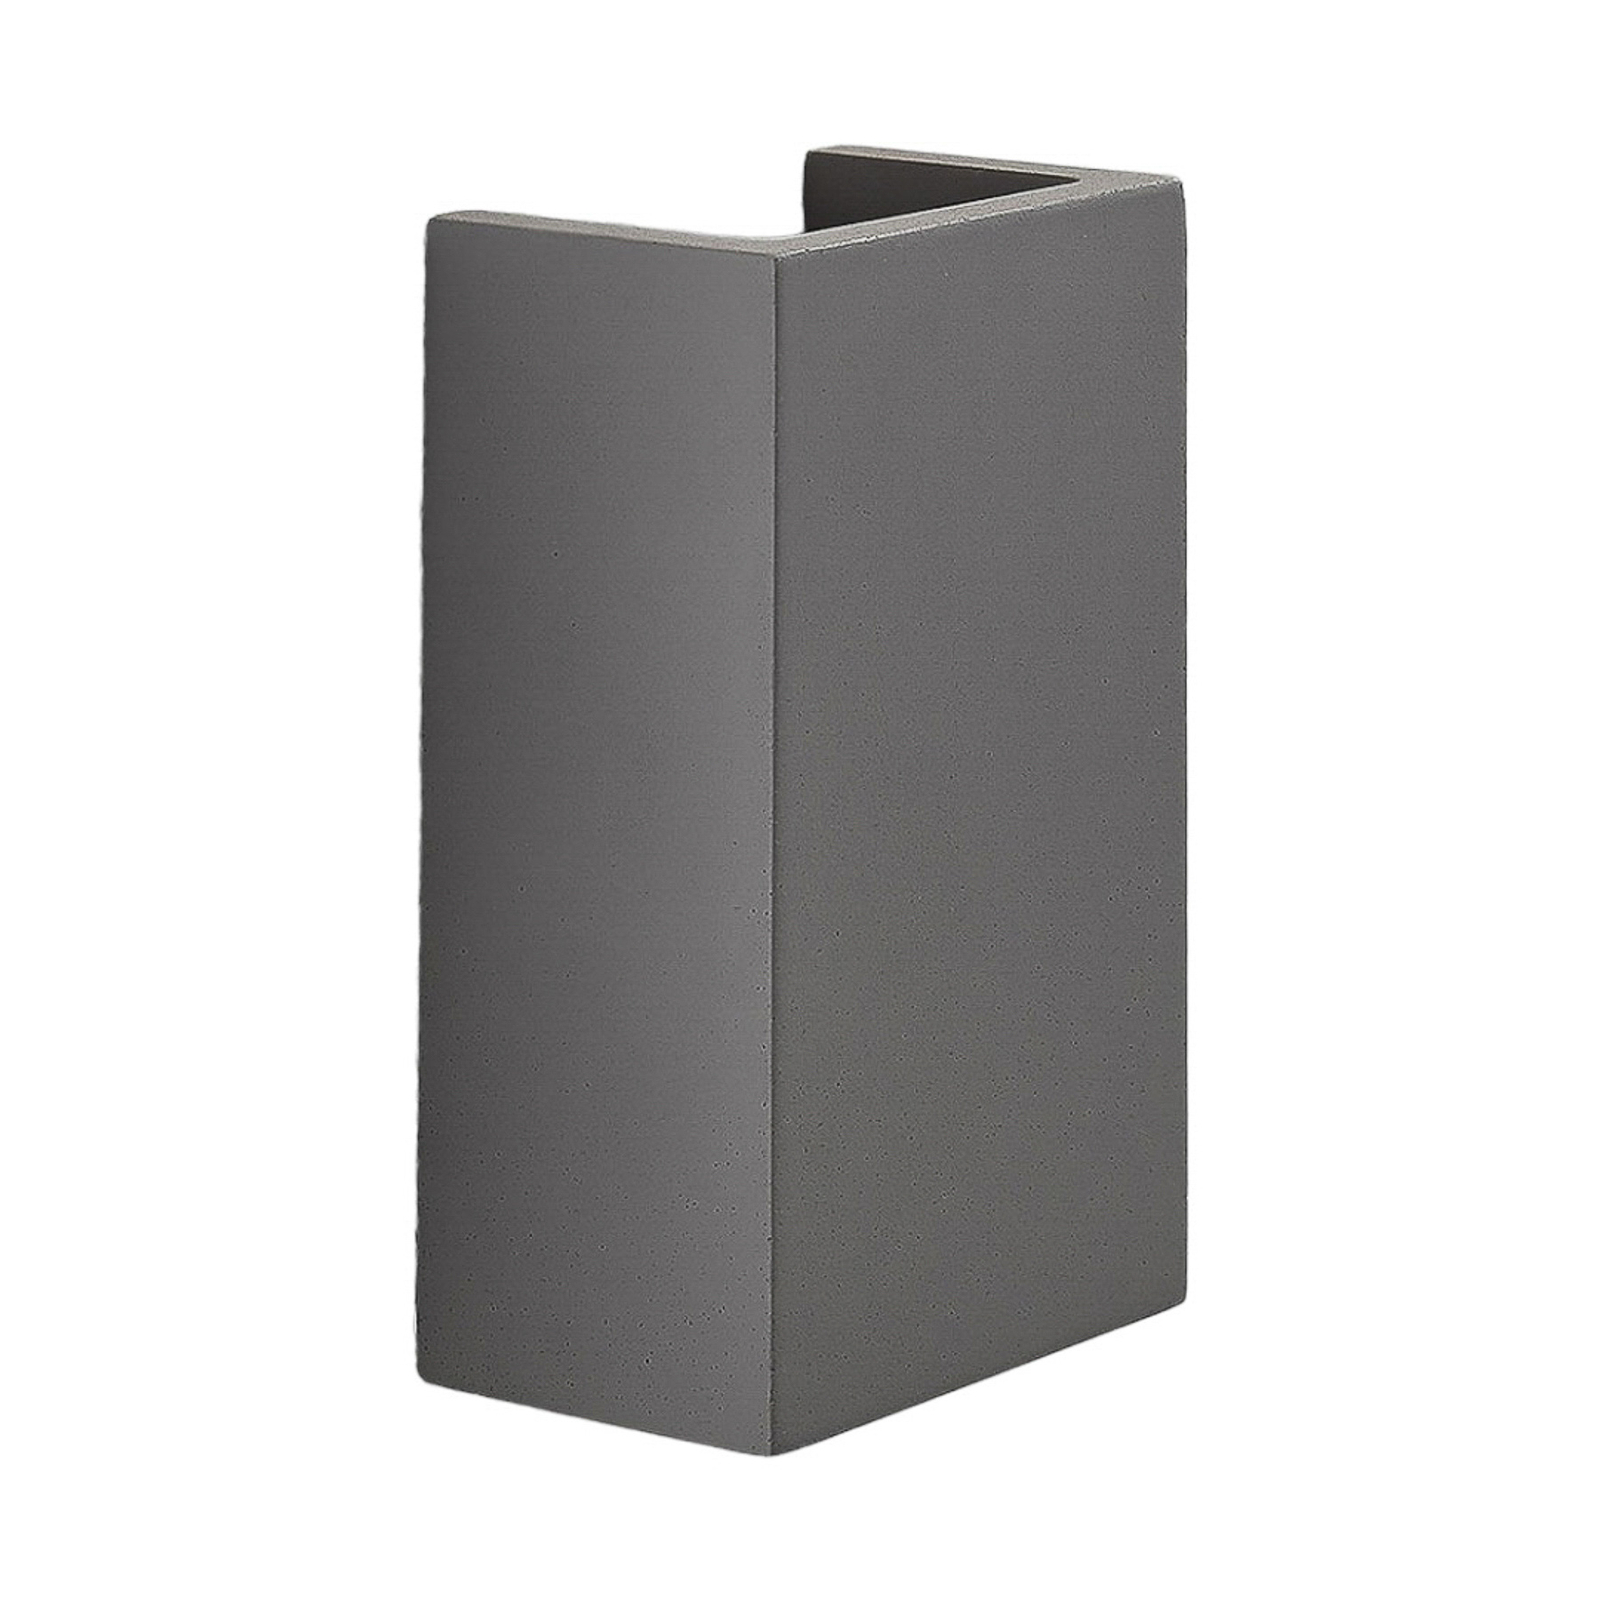 Beton-wandlamp Smira in grijs , 11x18 cm